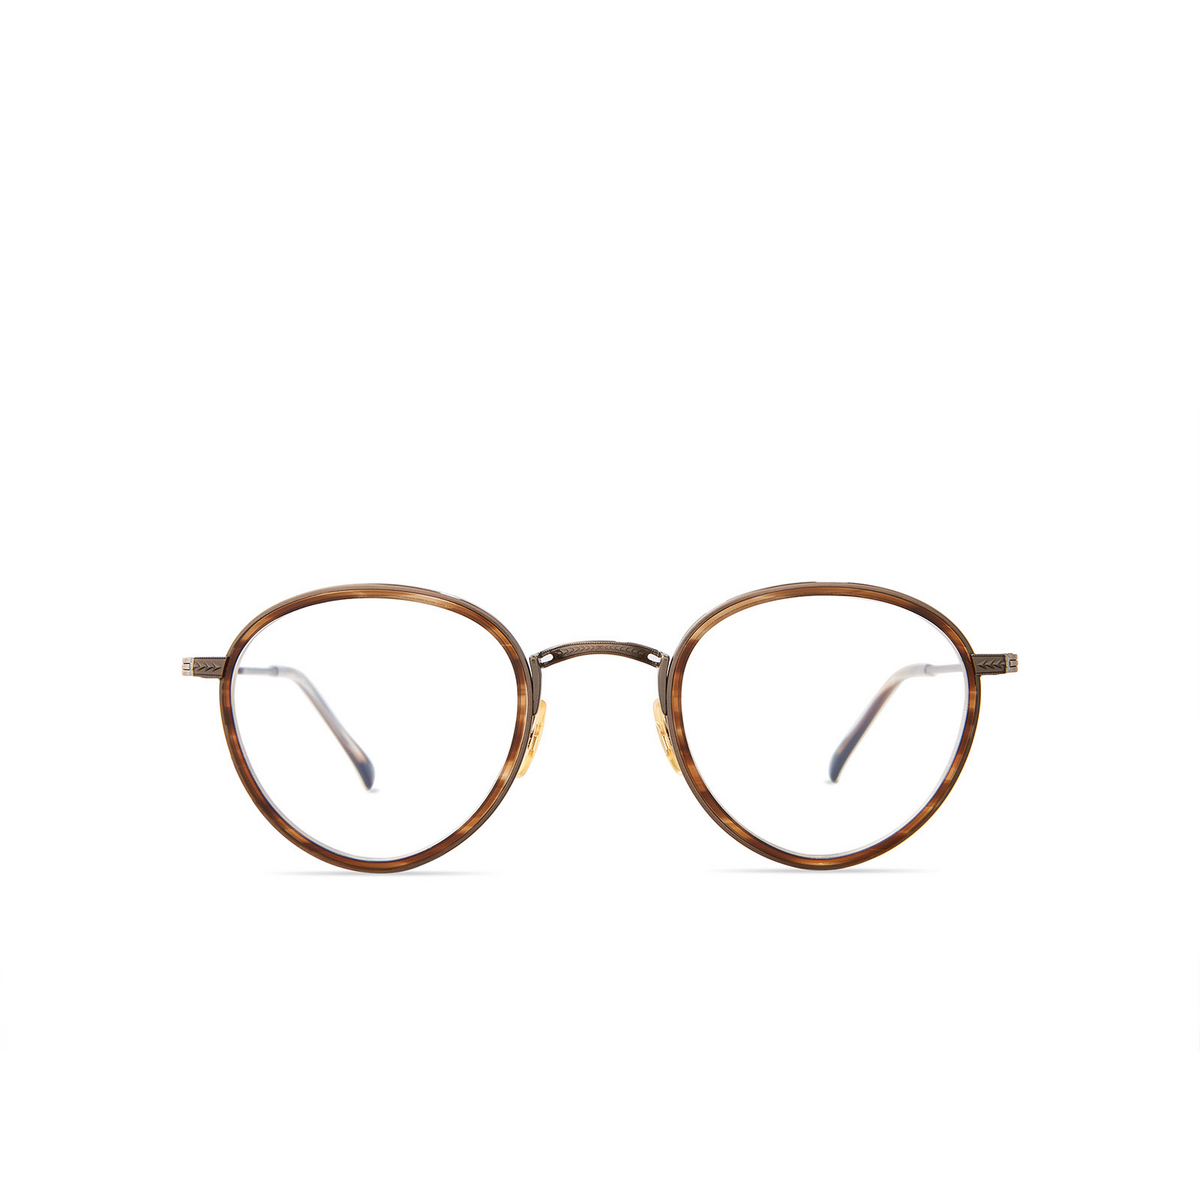 Mr. Leight BRISTOL C Eyeglasses TOB-ATG Tobacco-Antique Gold - front view